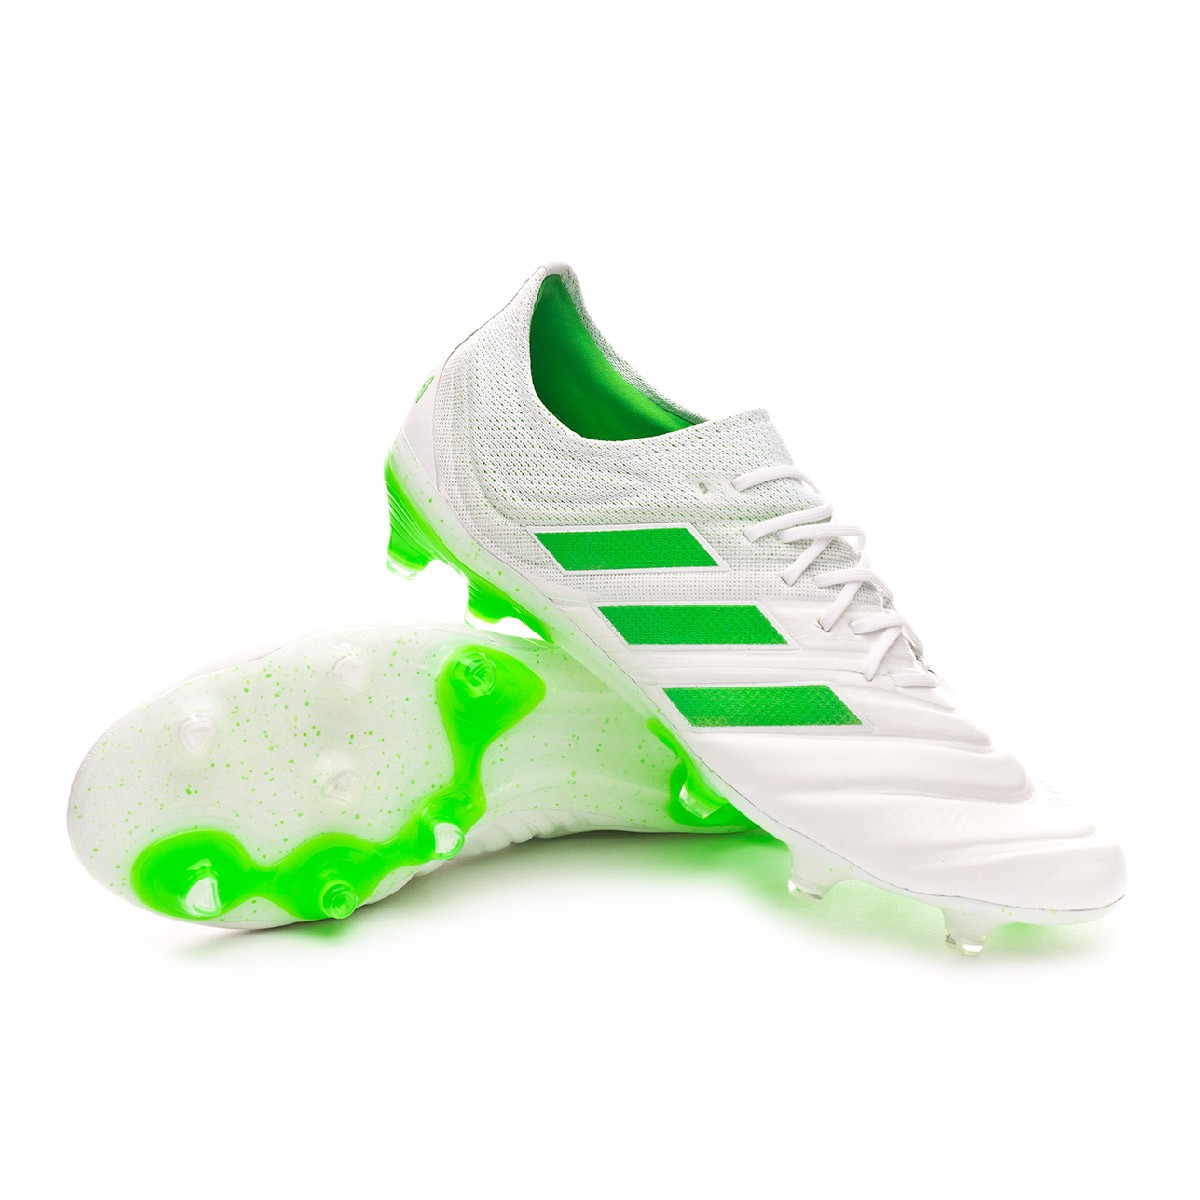 lime green adidas football boots